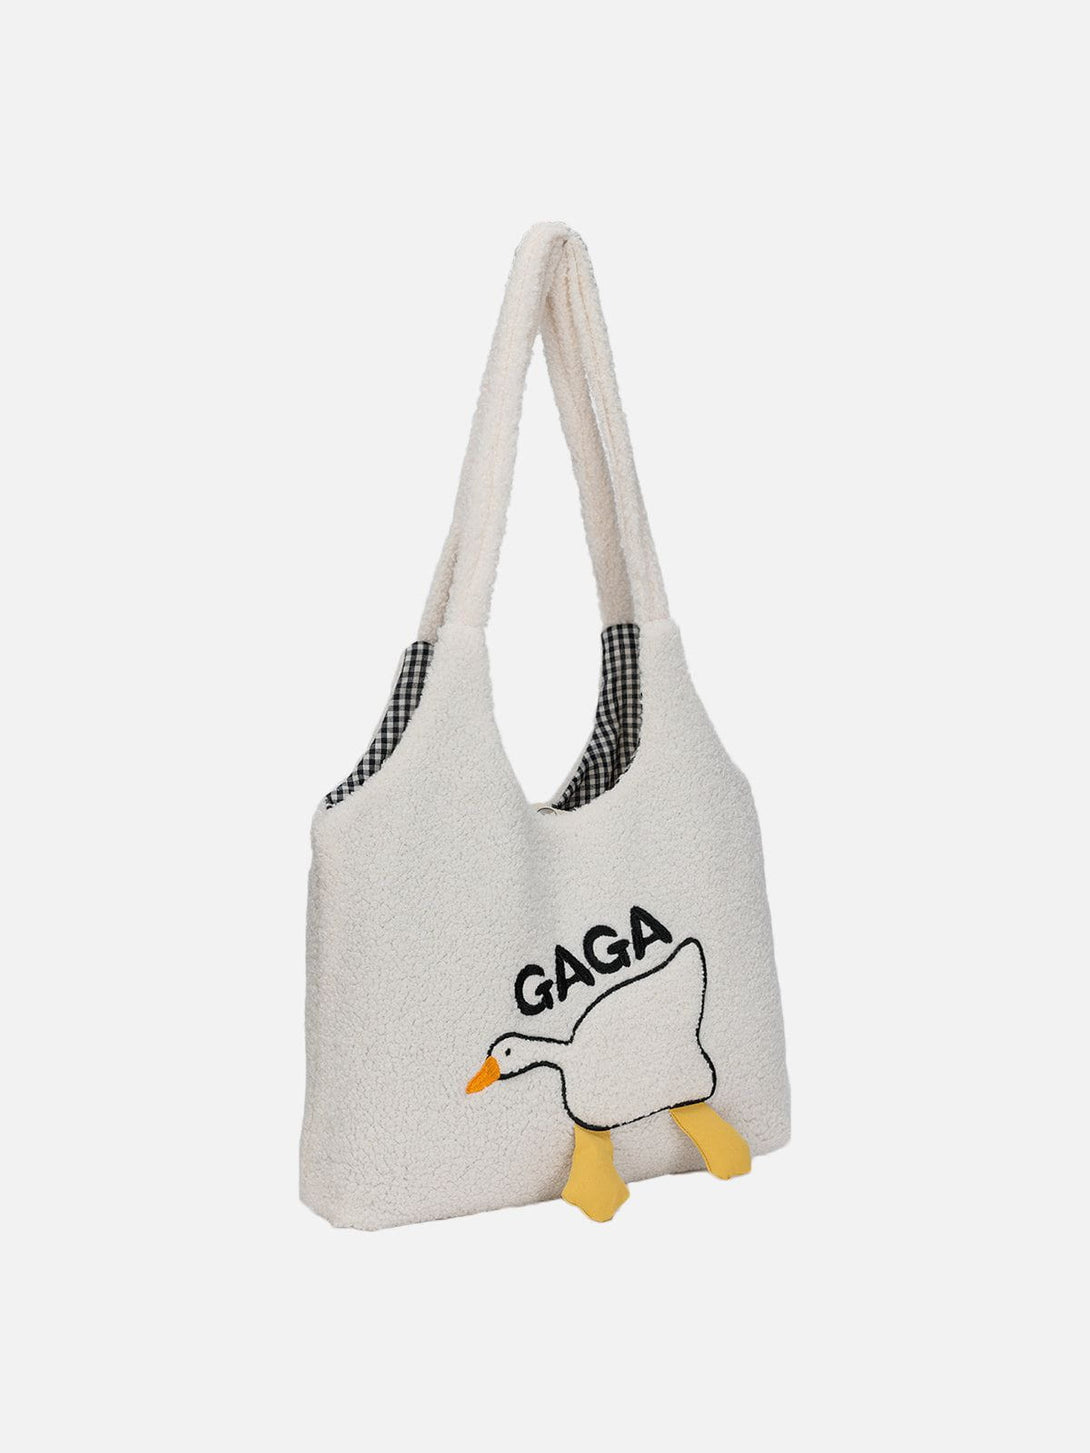 Majesda® - GAGA Embroidered Goose Bag- Outfit Ideas - Streetwear Fashion - majesda.com